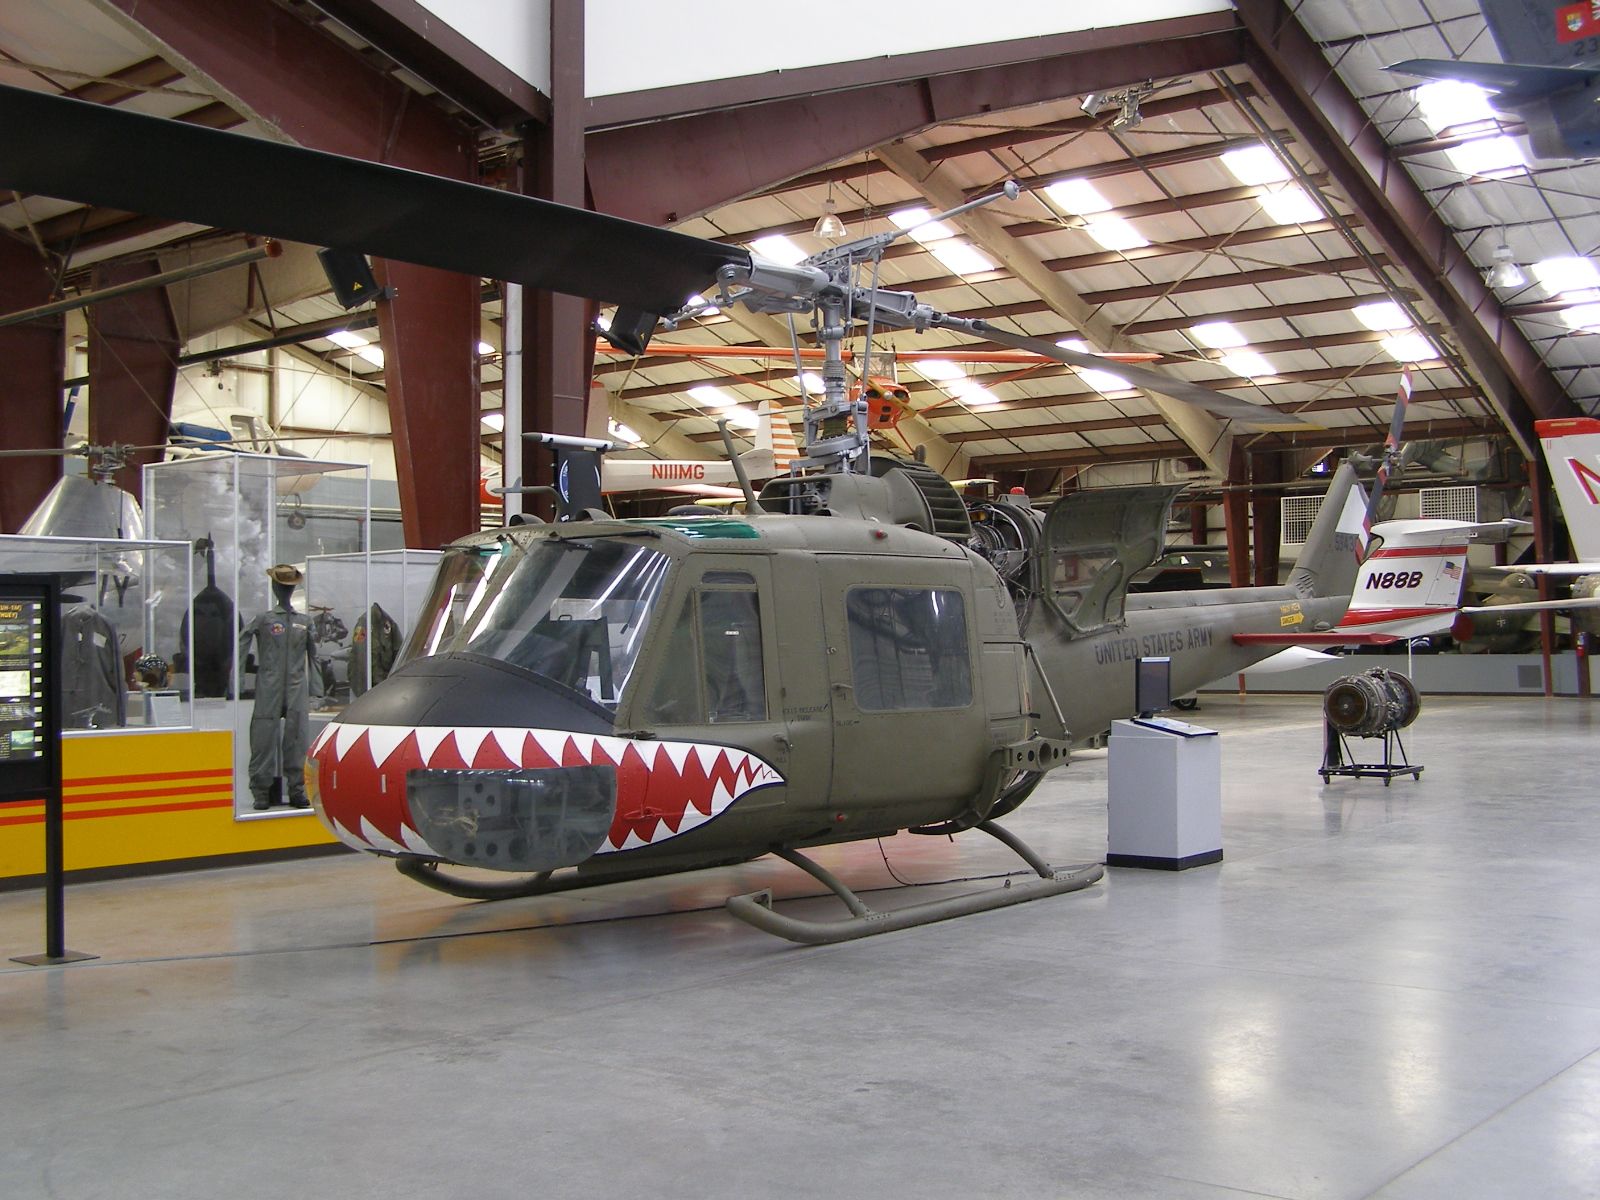 Vietnam era "Huey" chopper